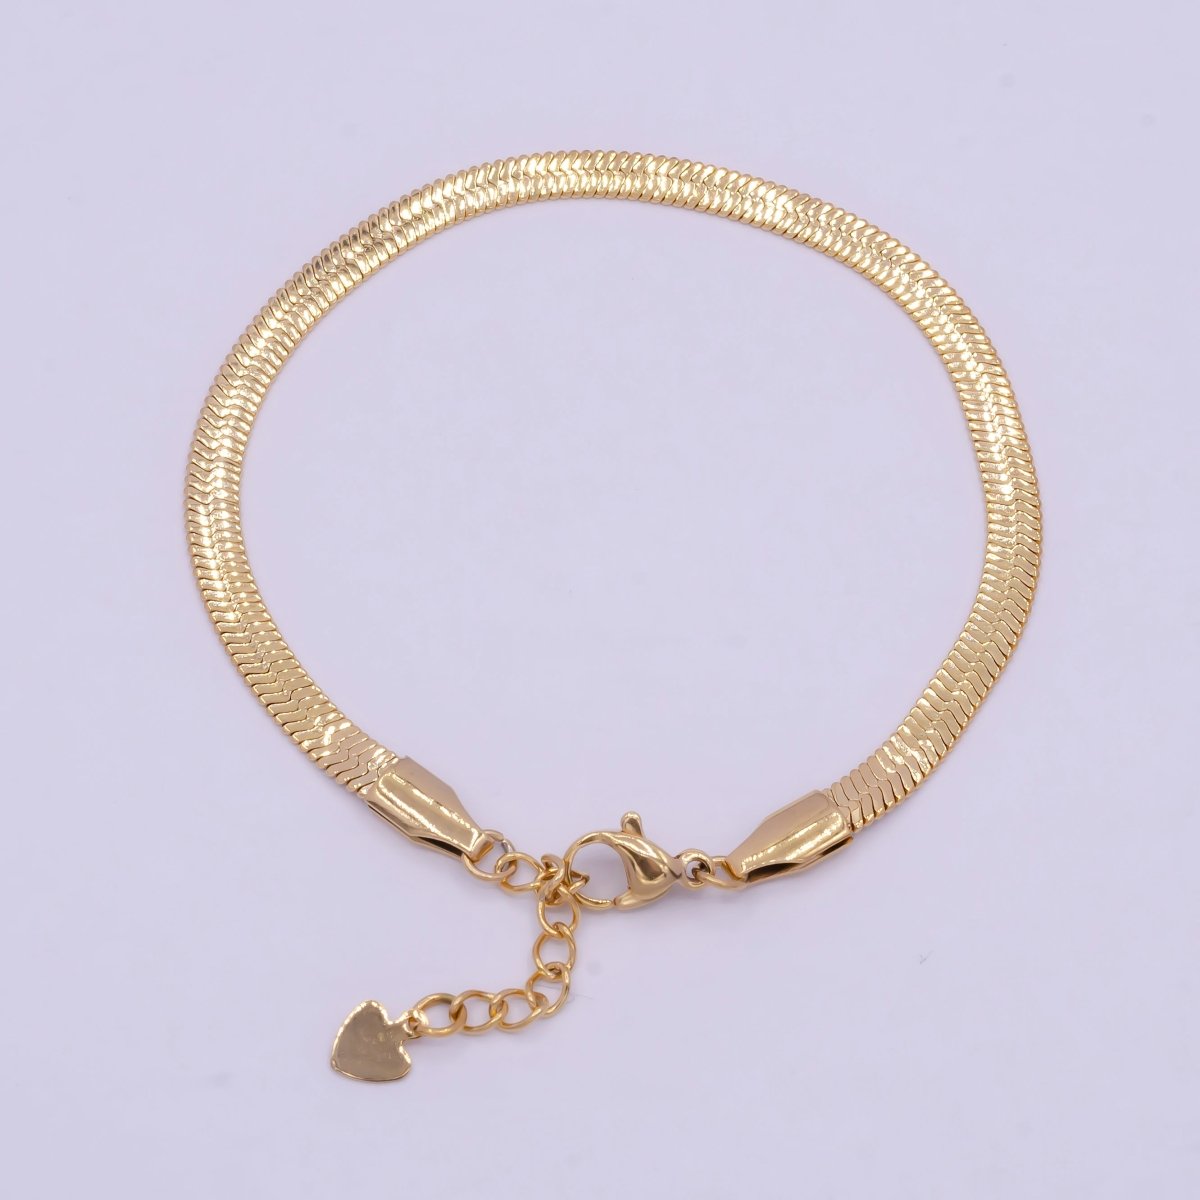 Gold 3mm 4mm 5mm Herringbone Snake Chain Bracelet For Wholesale Bracelet Jewelry Making Supply | WA-924 WA-925 WA-926 Clearance Pricing - DLUXCA